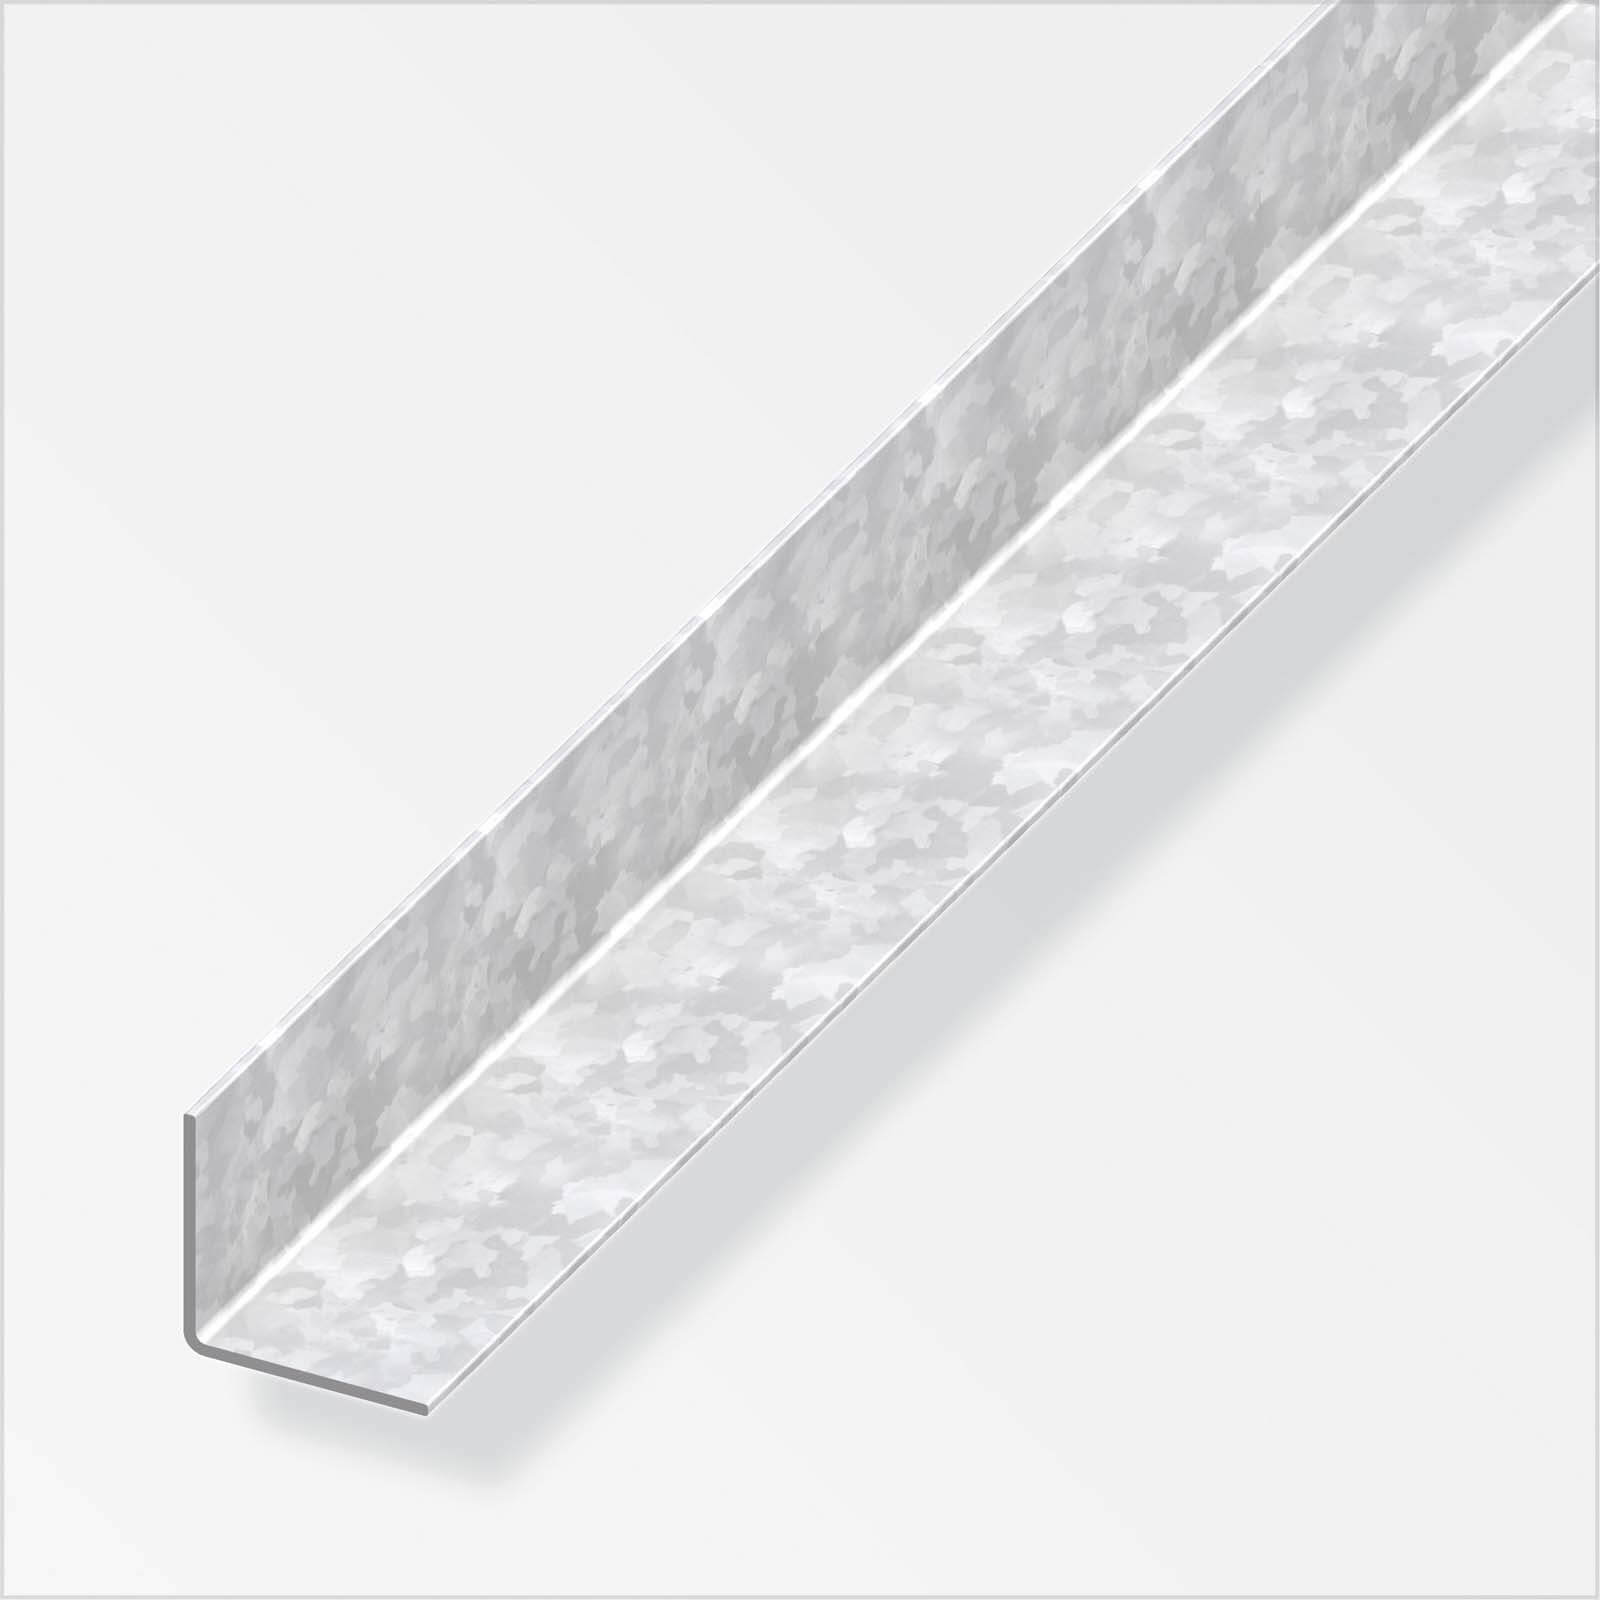 Photo of Galvanised Steel Equal Angle Profile - 1m X 35.5 X 35.5mm